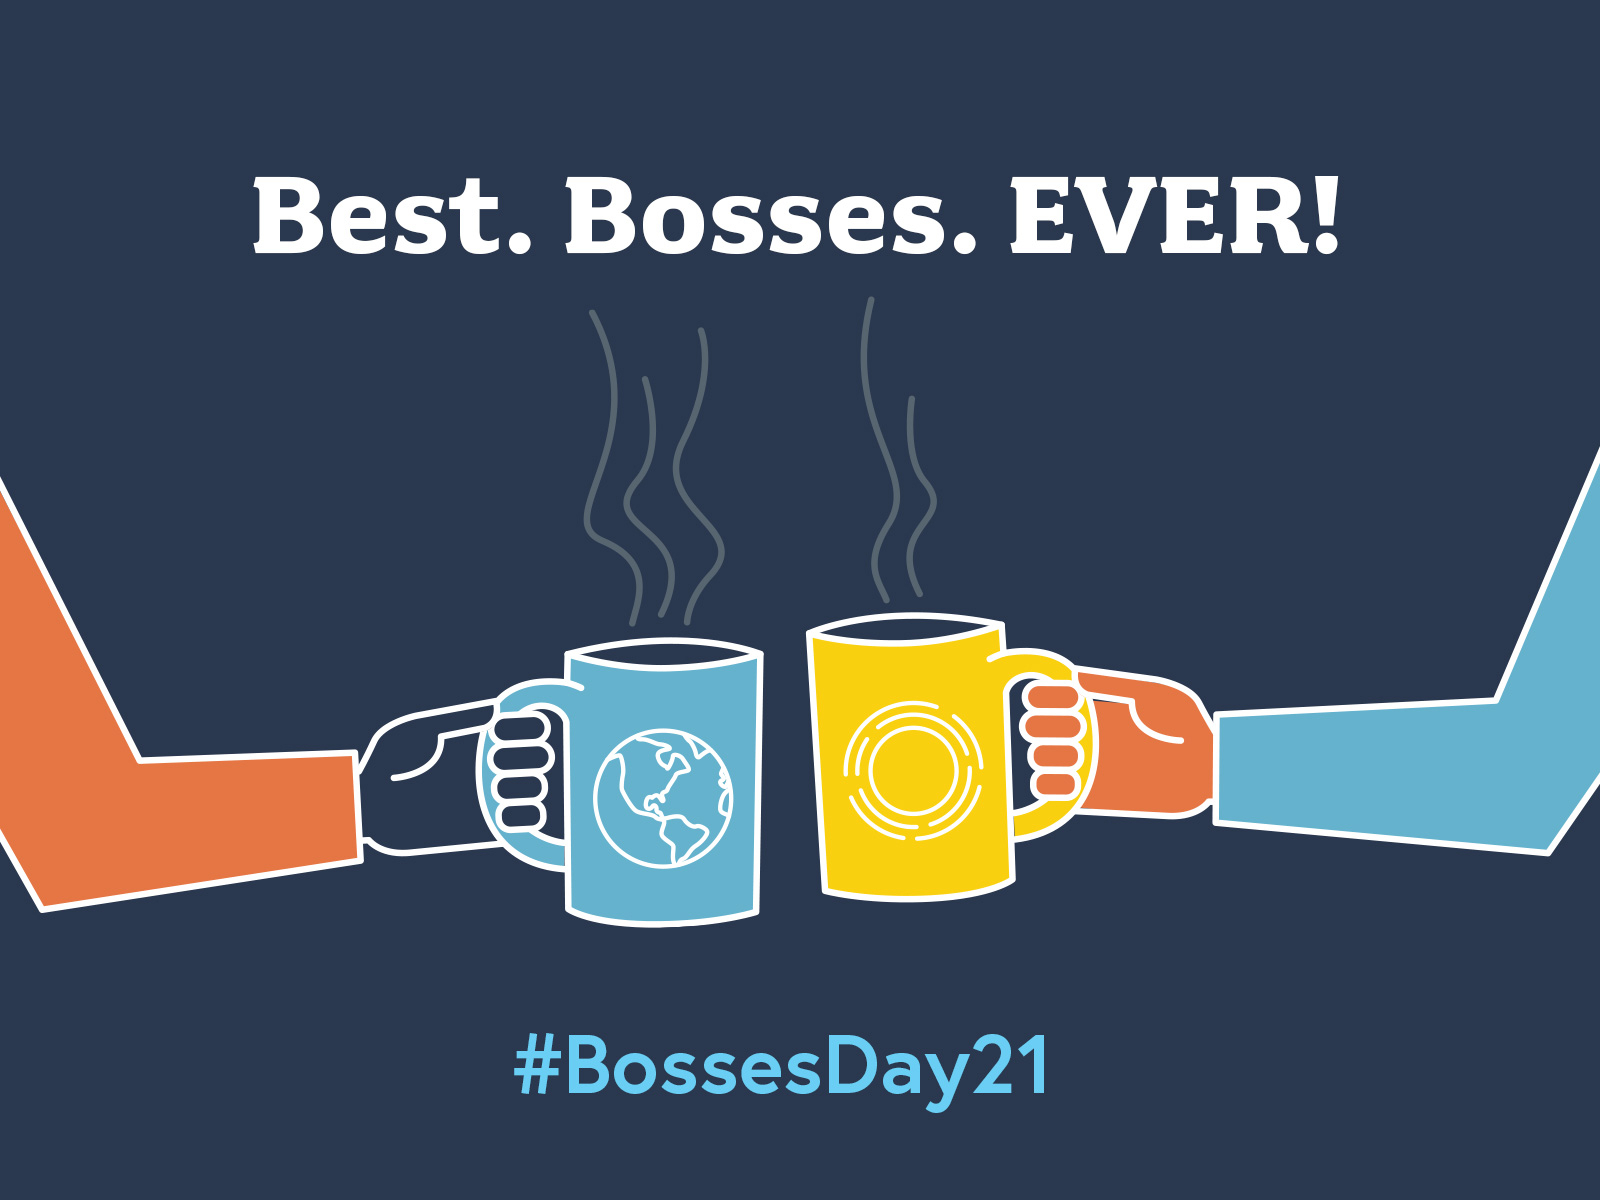 Bosses Day by DakotaDiesel on Dribbble